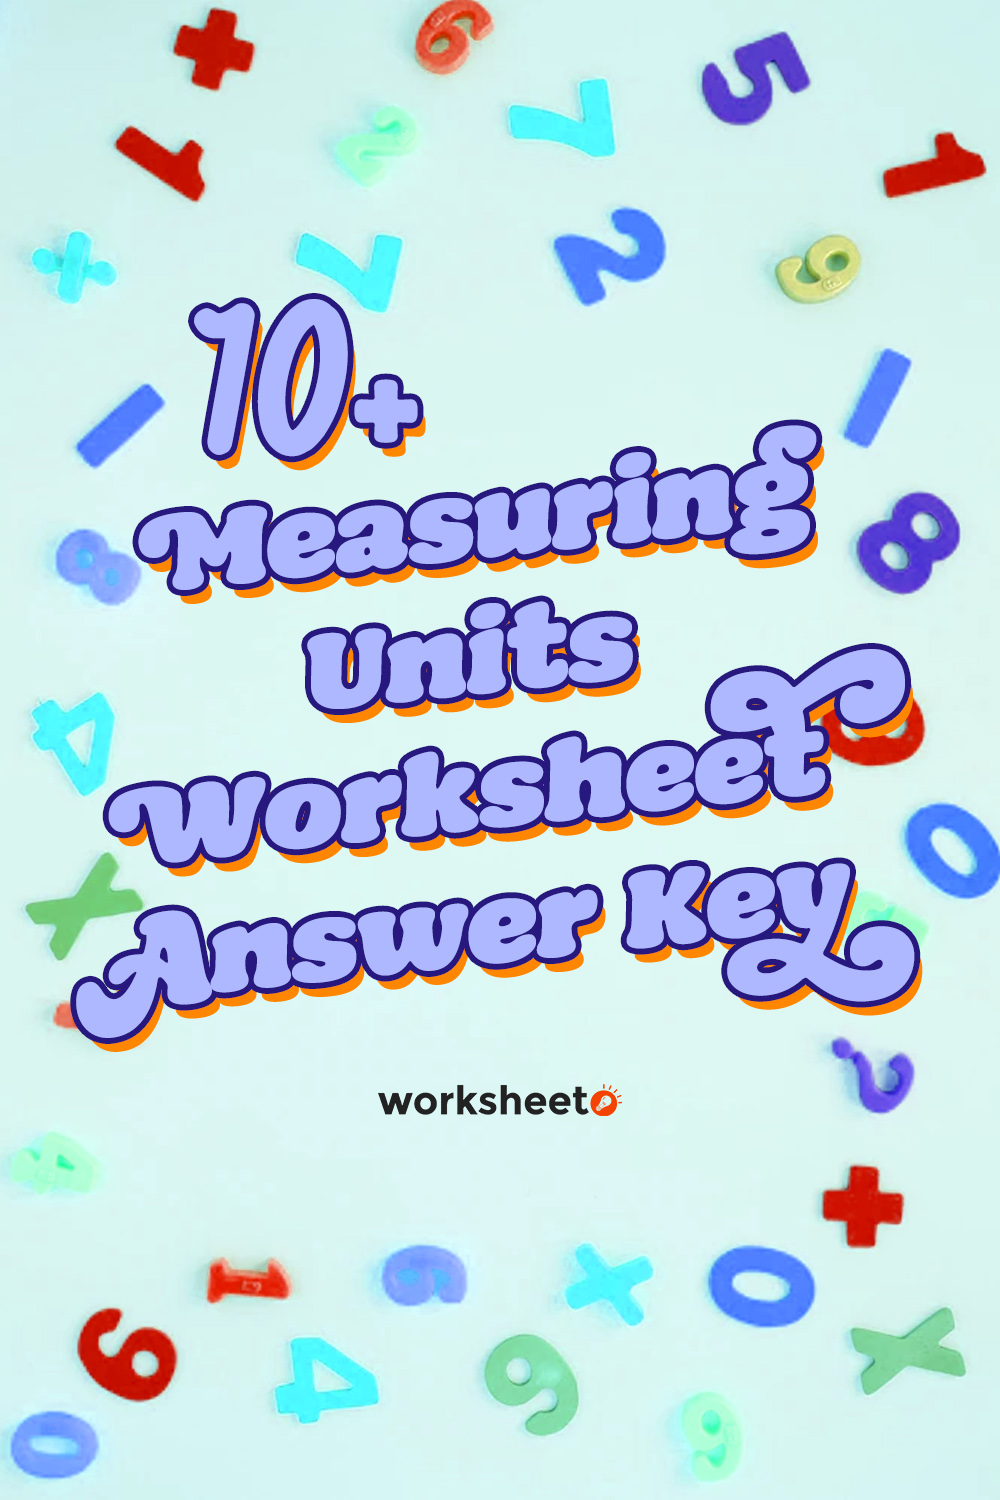 12 Images of Measuring Units Worksheet Answer Key